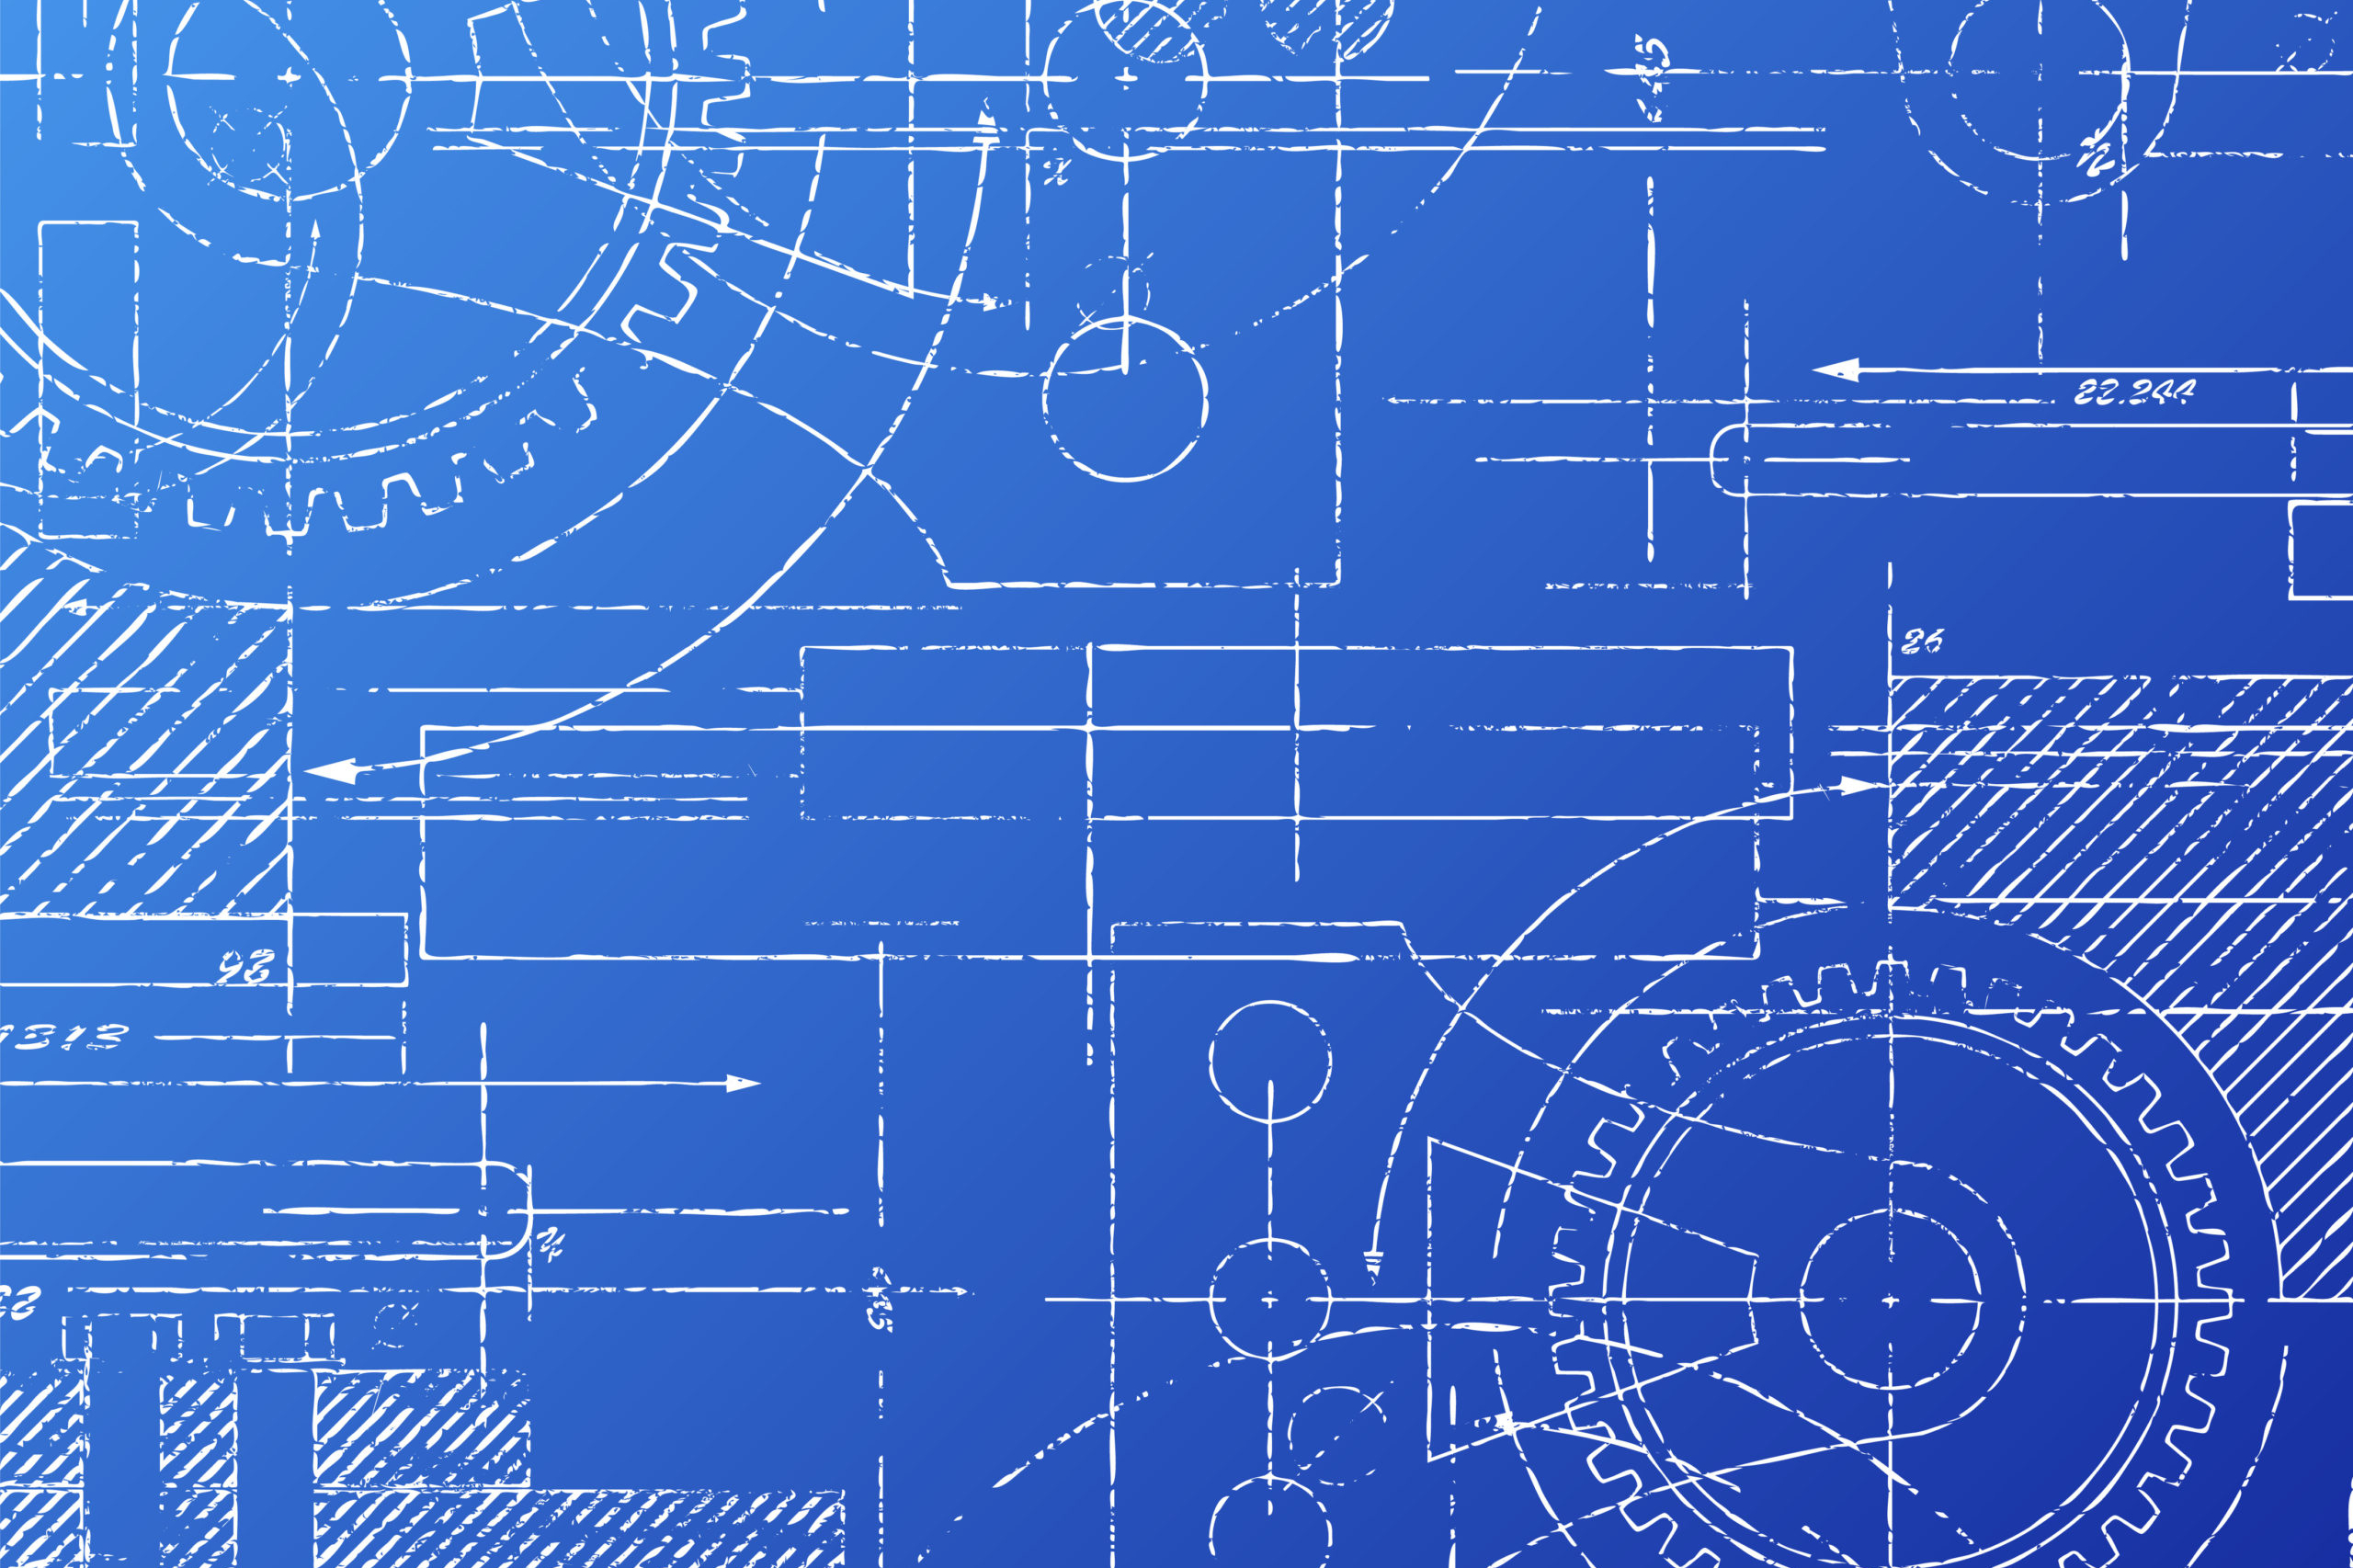 Grungy technical blueprint illustration on blue background